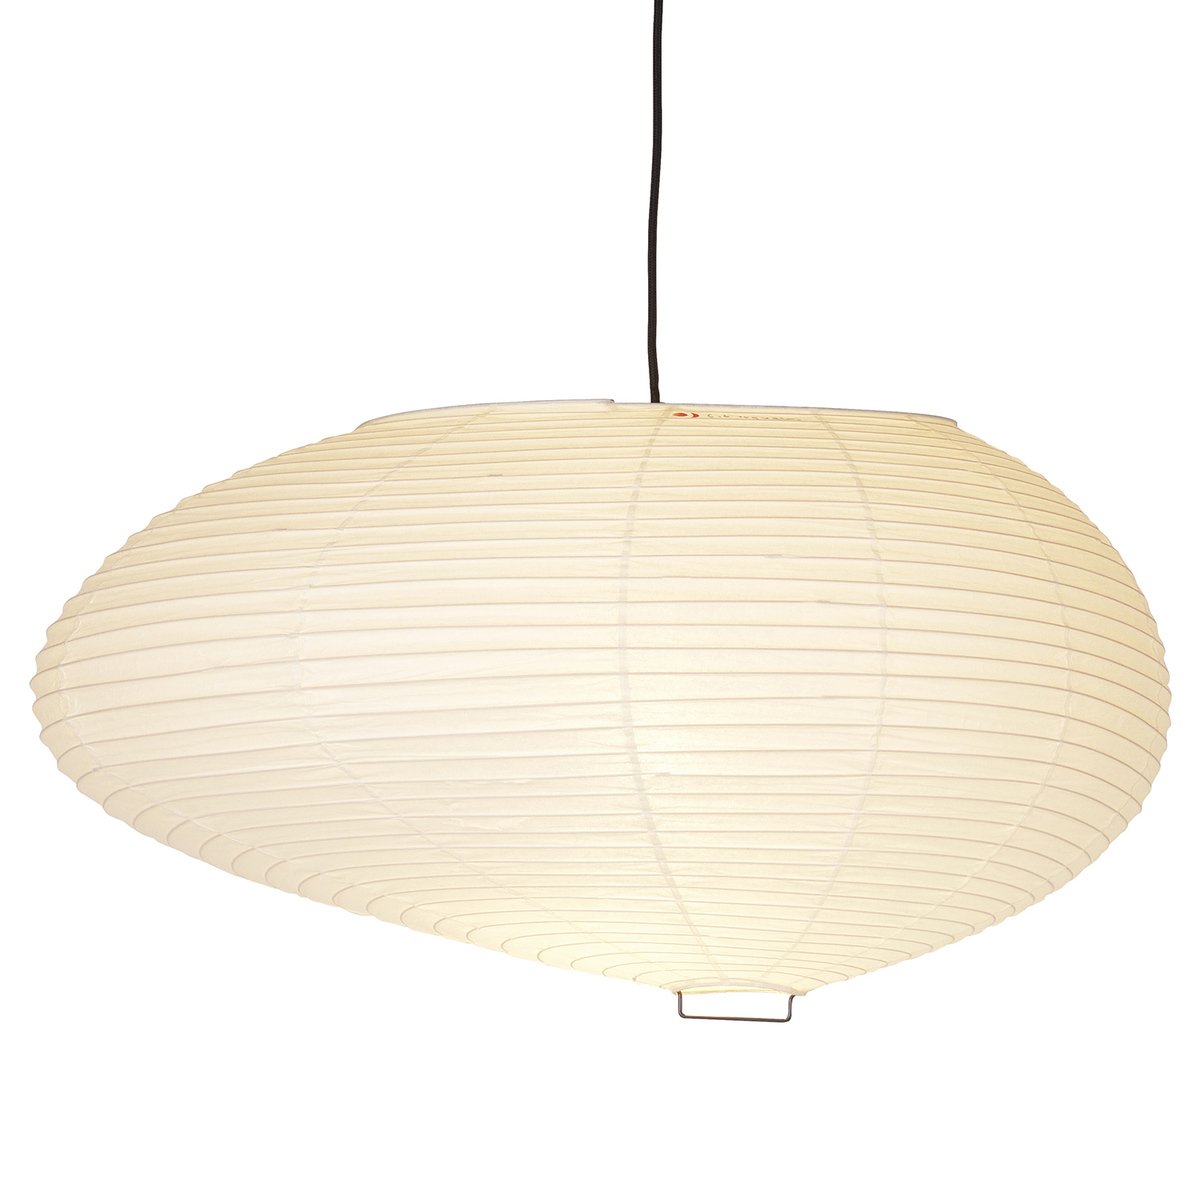 Isamu Noguchi AKARI26A Interior Light Lamp Shade for sale online